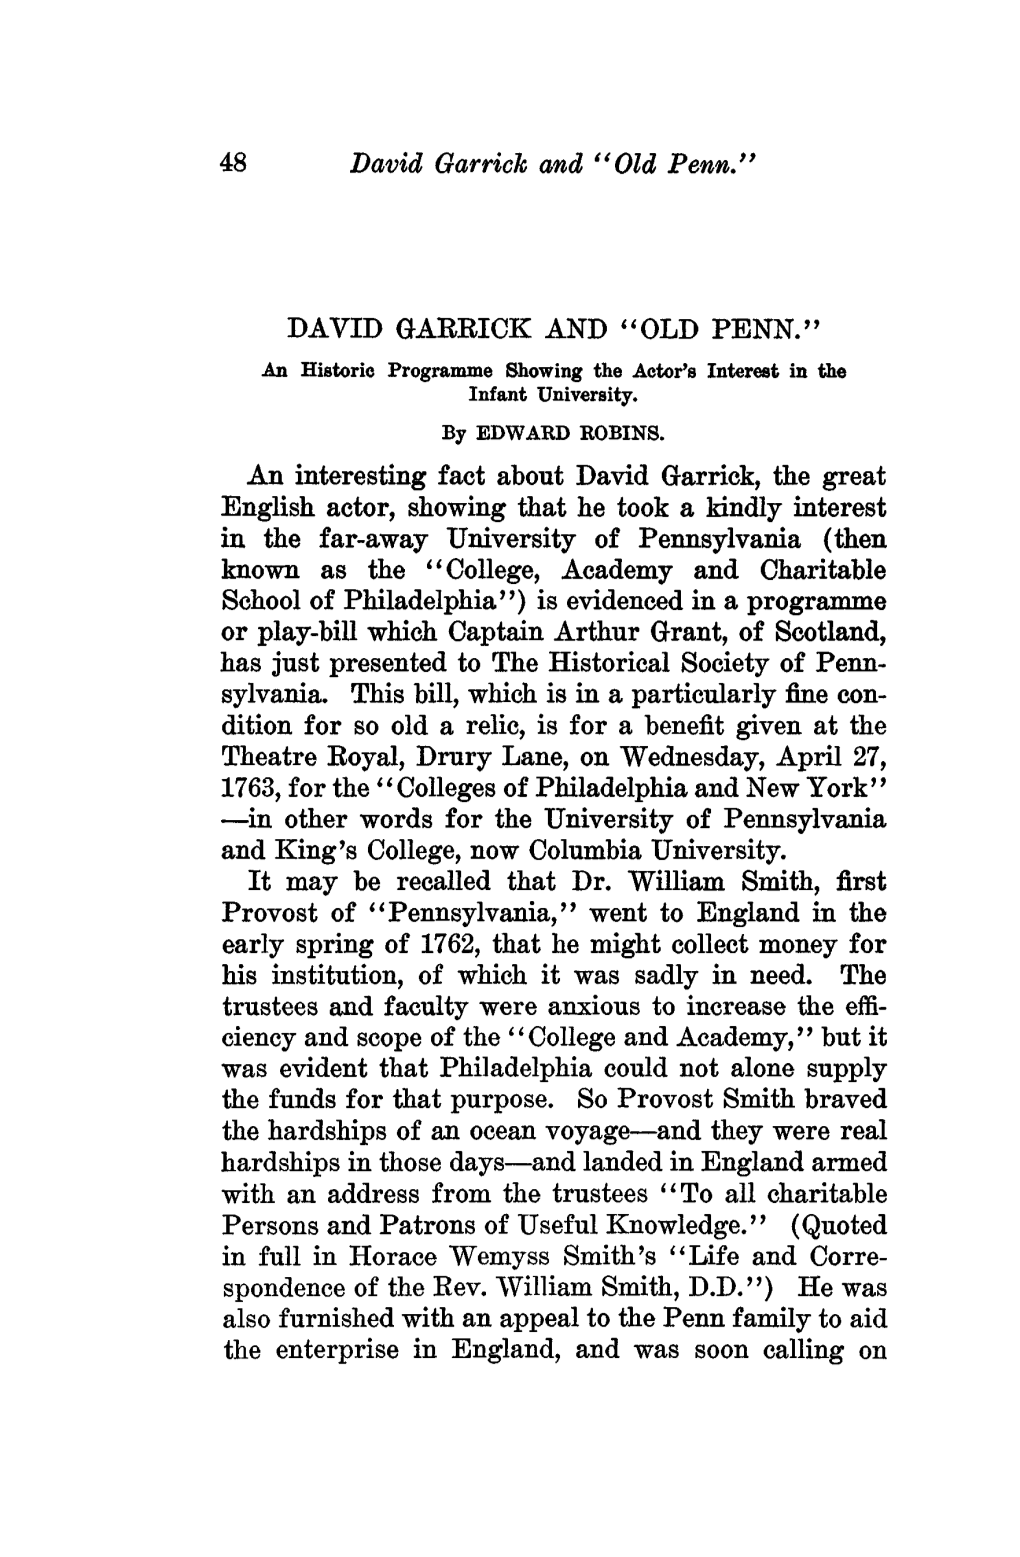 48 David Gar Rick and "Old Penn." DAVID GAEBICK and "OLD PENN." an Interesting Fact About David Garrick